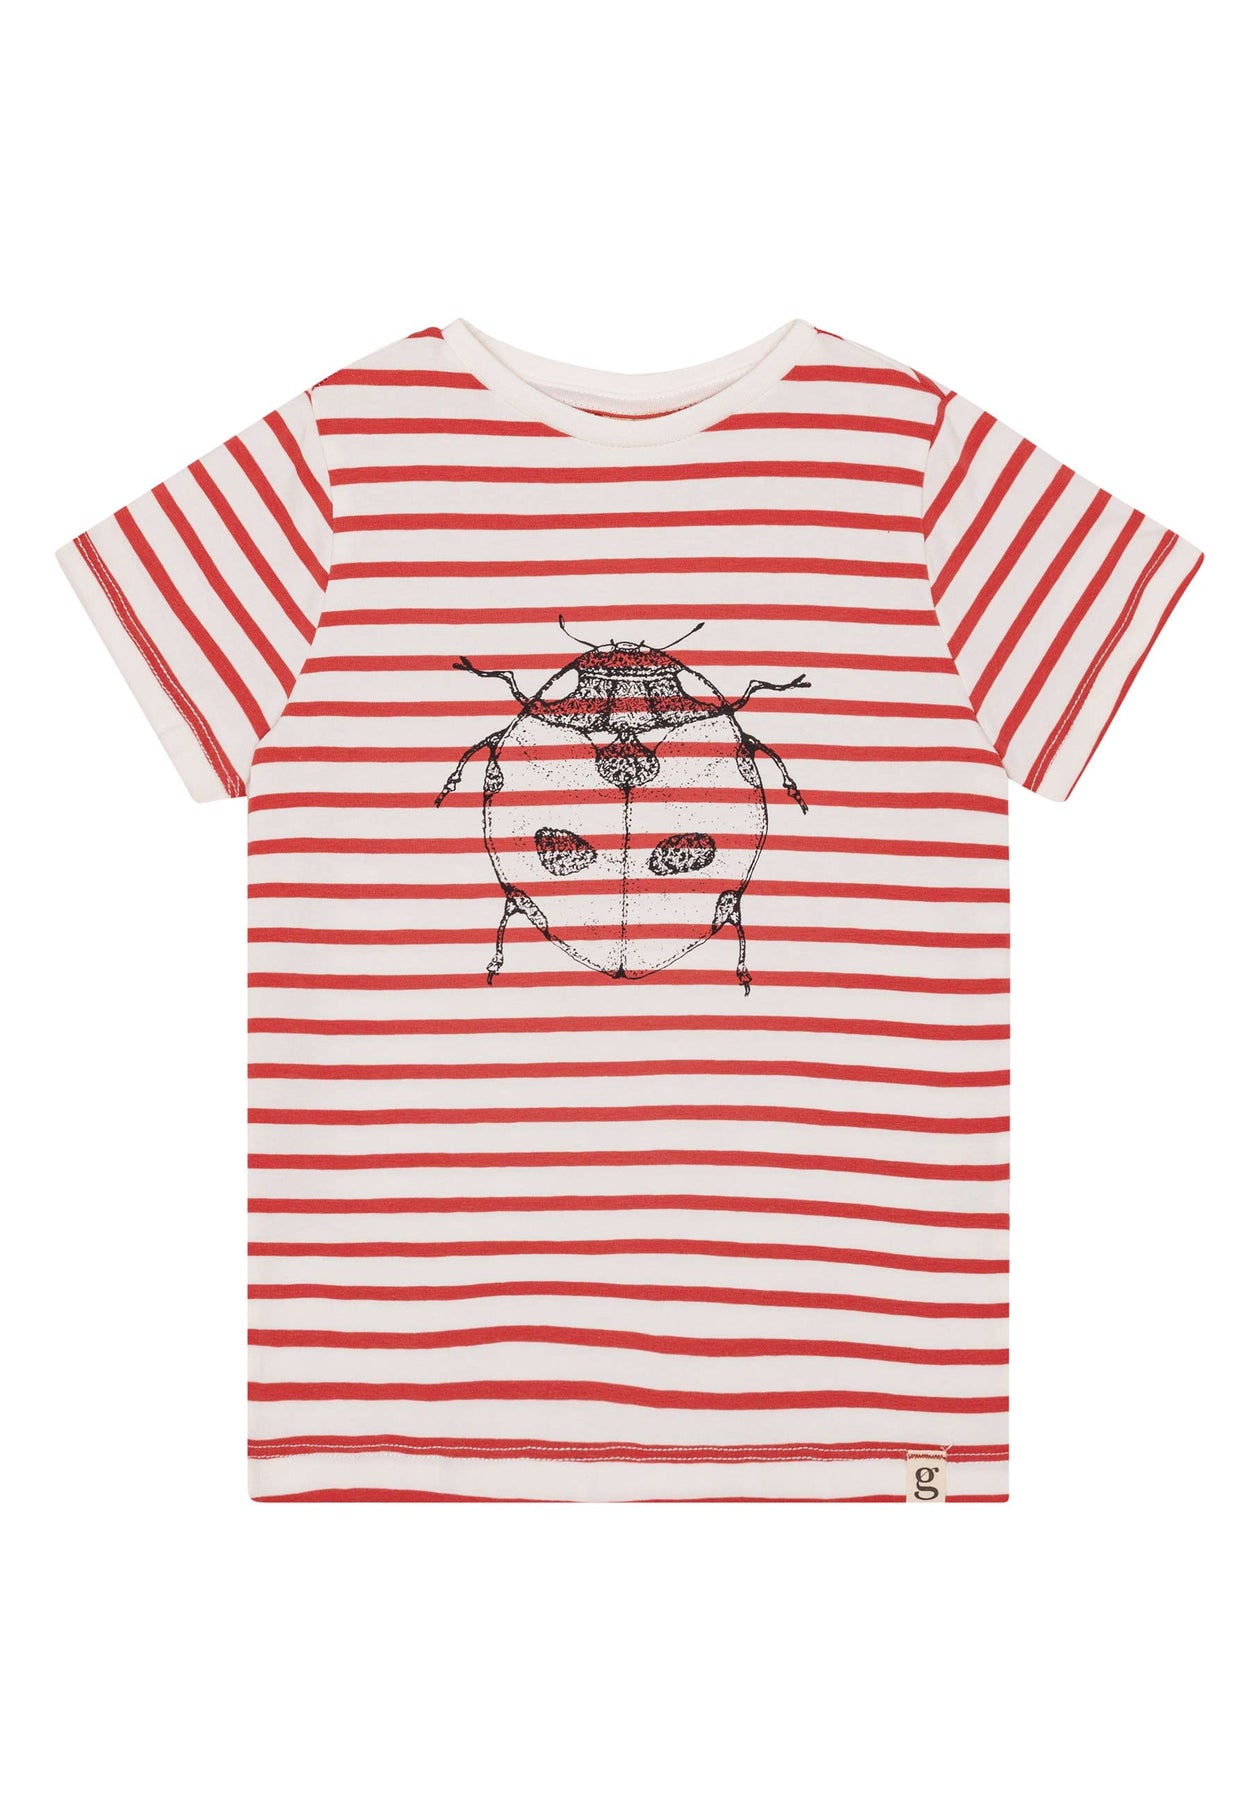 GROBUND Chris t-shirten mini - den med ribsrøde striber og mariehøne